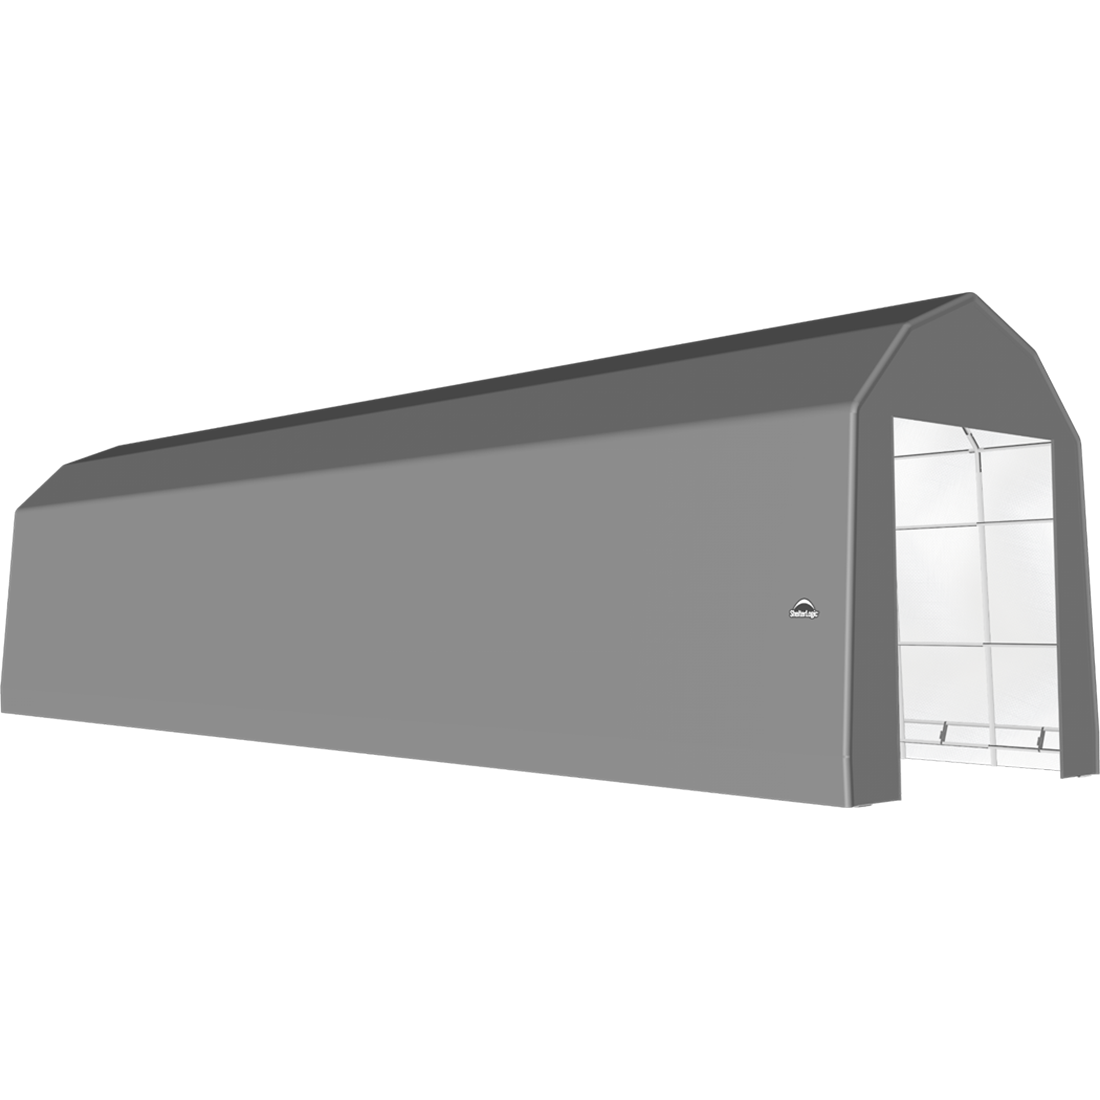 ShelterTech SP Series Barn Shelter, 15 ft. x 56 ft. x 17 ft. Heavy Duty PVC 14.5 oz. Gray